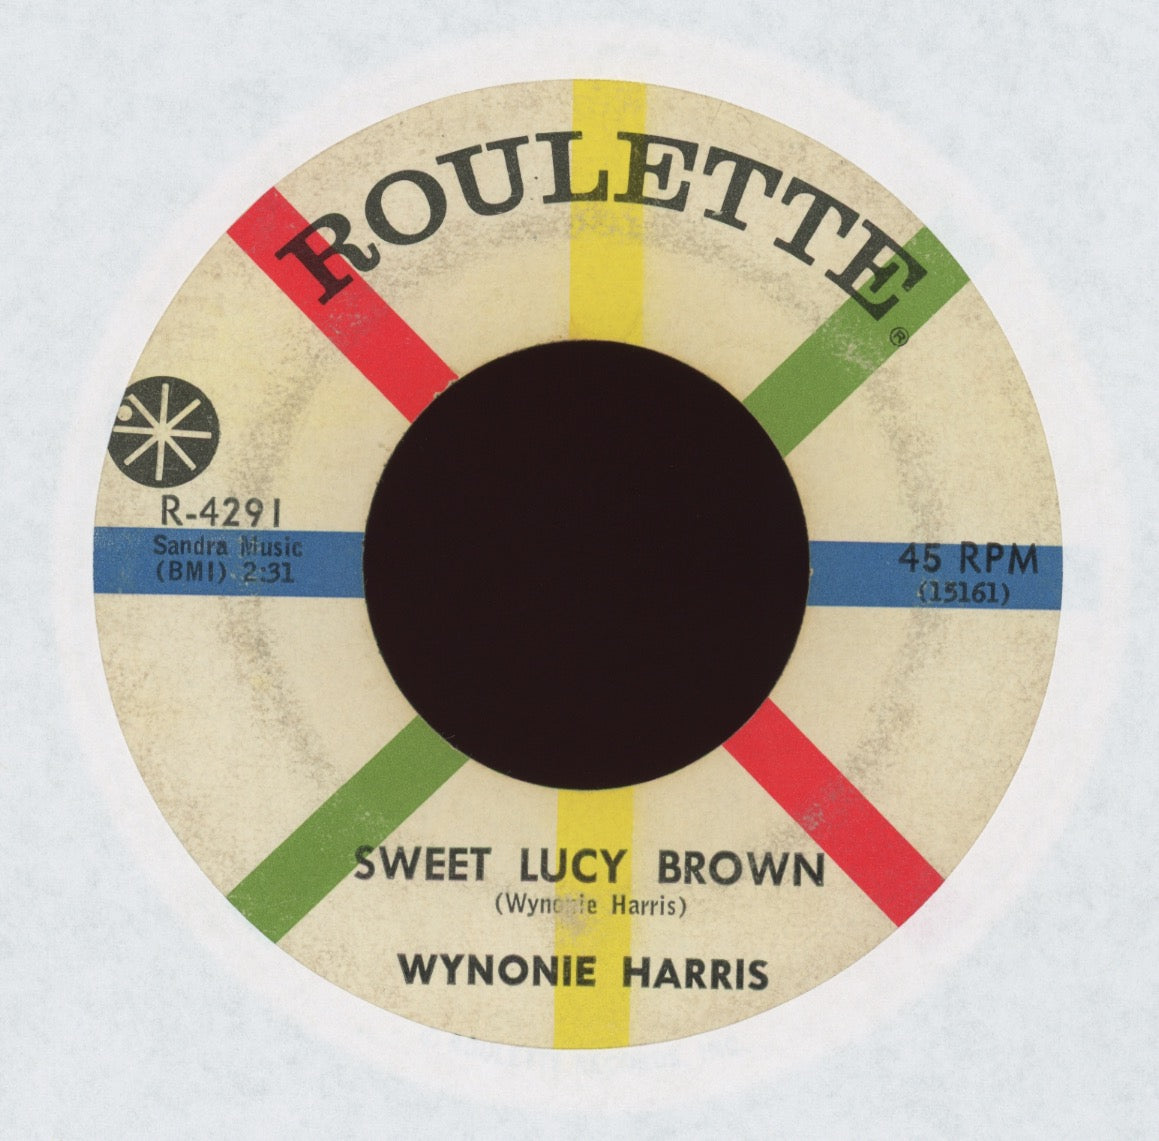 Wynonie Harris - Sweet Lucy Brown on Roulette